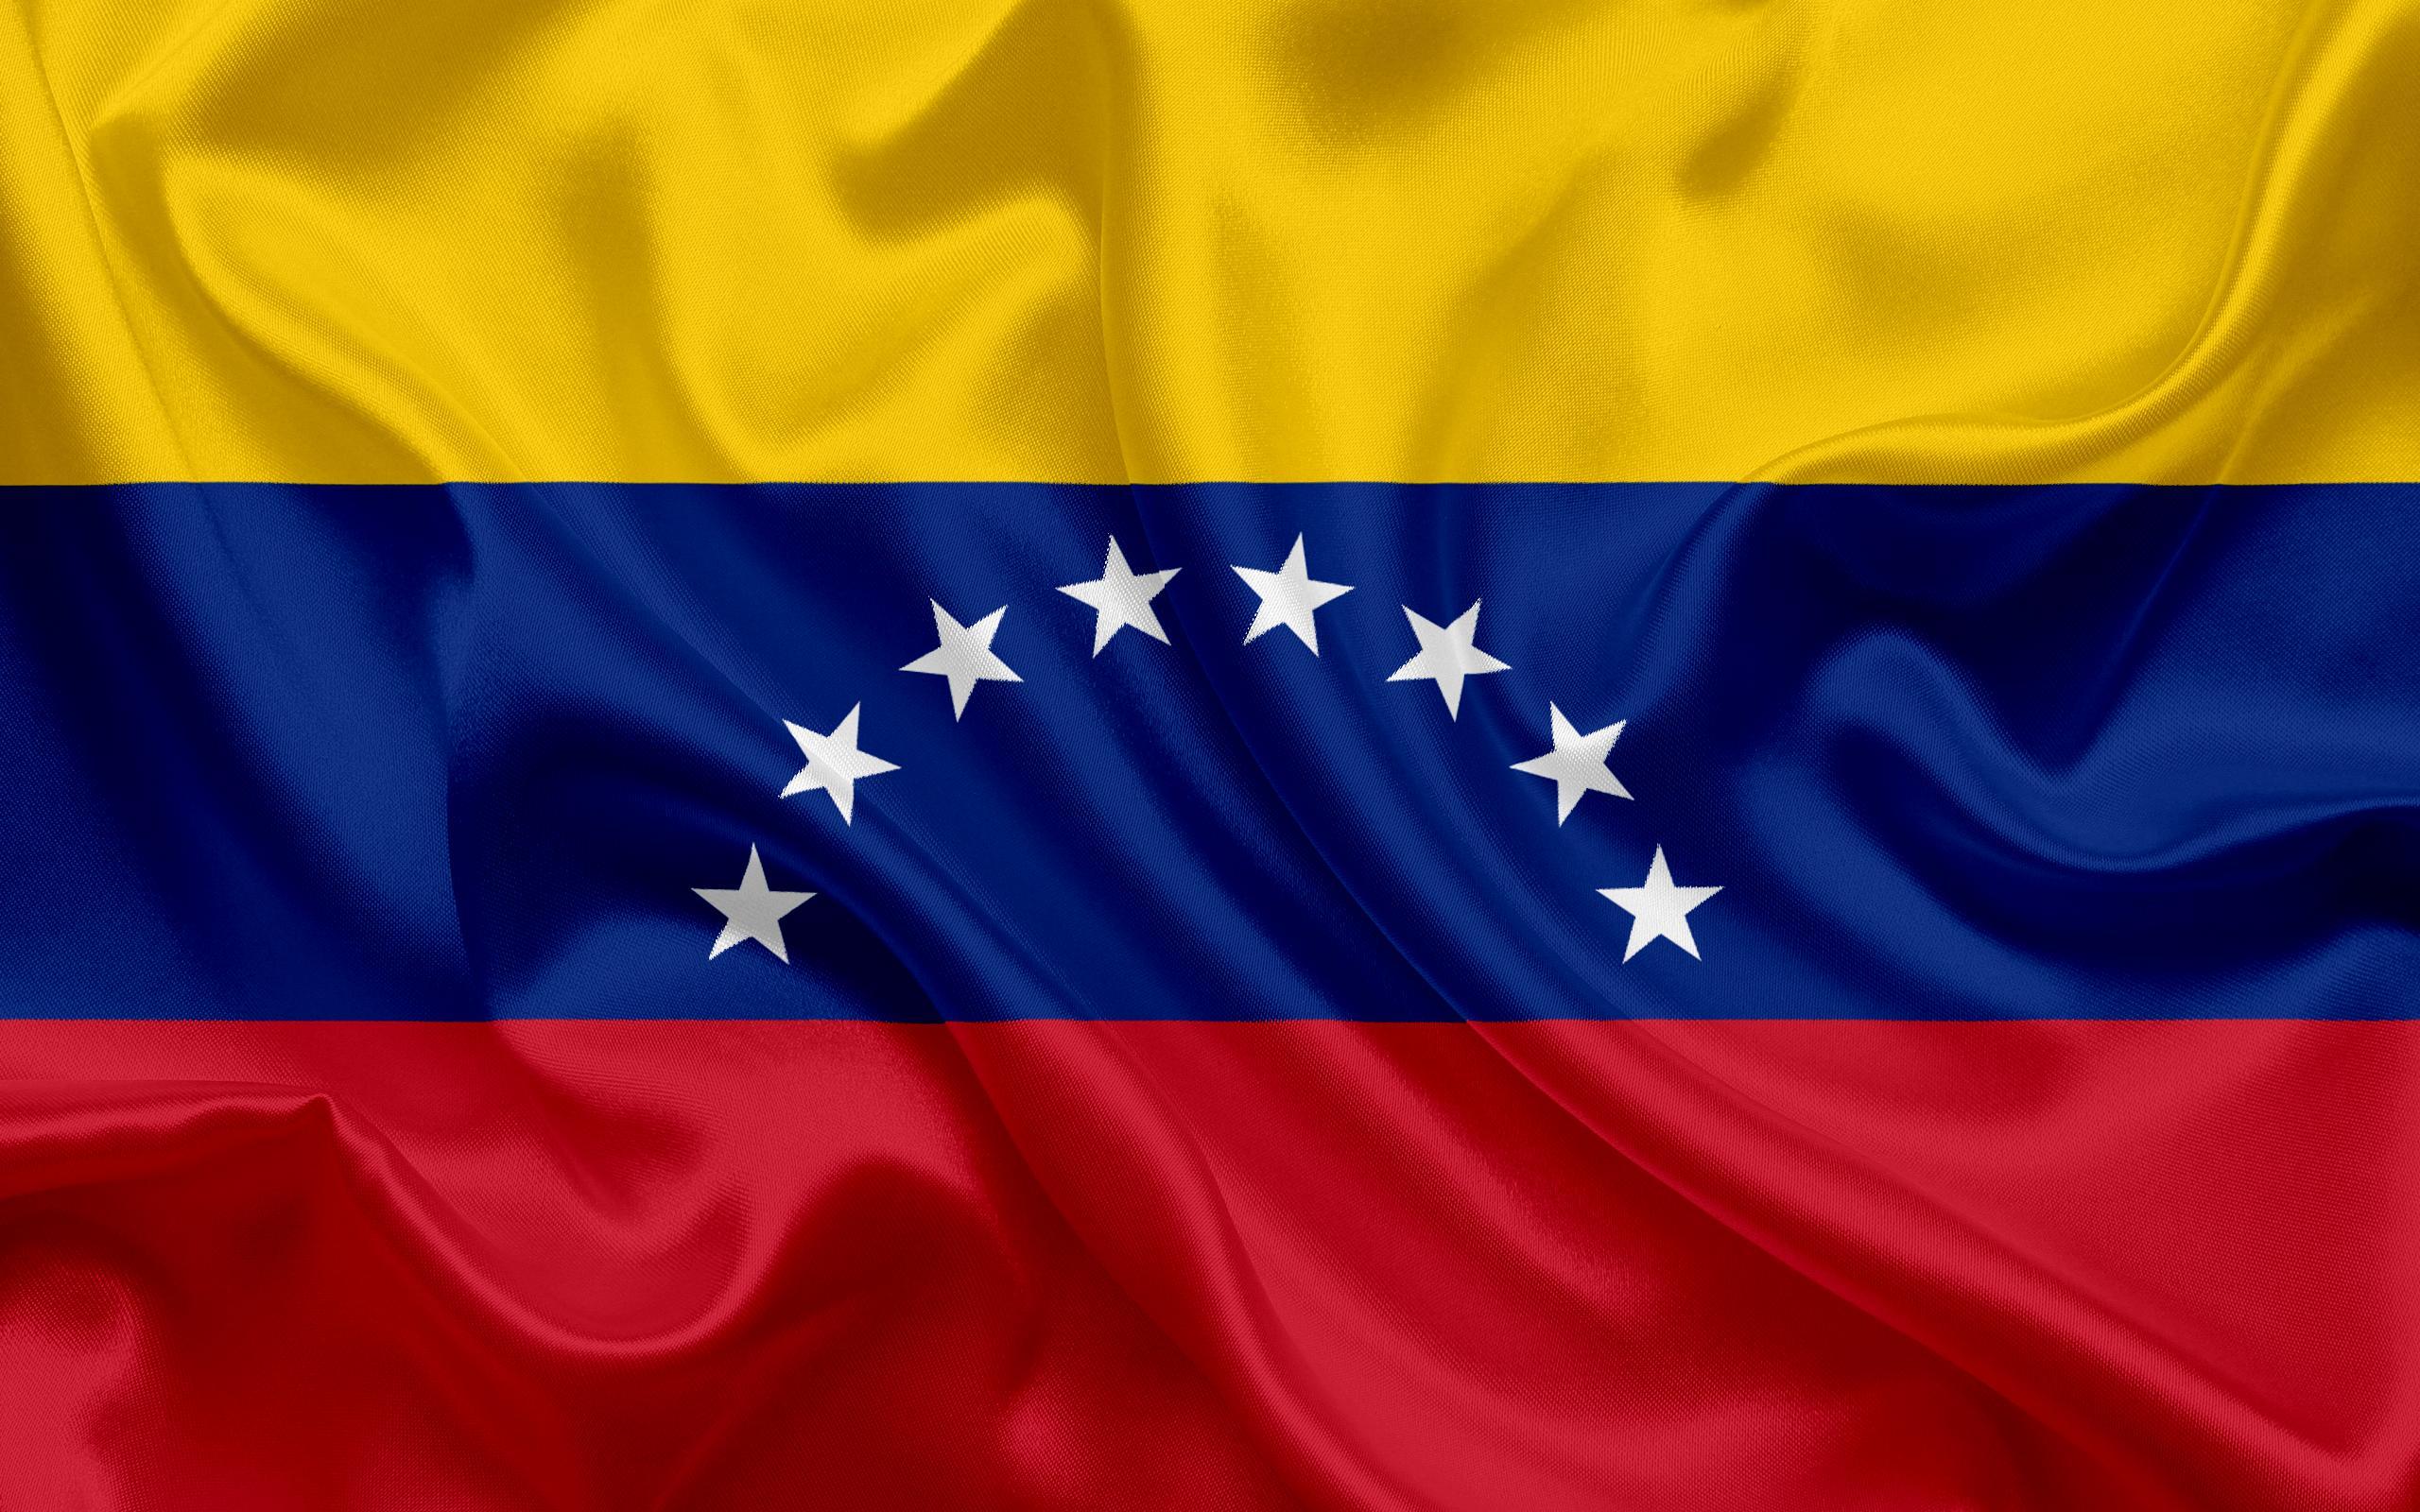 Download wallpaper Venezuelan flag, Venezuela, national flag, silk